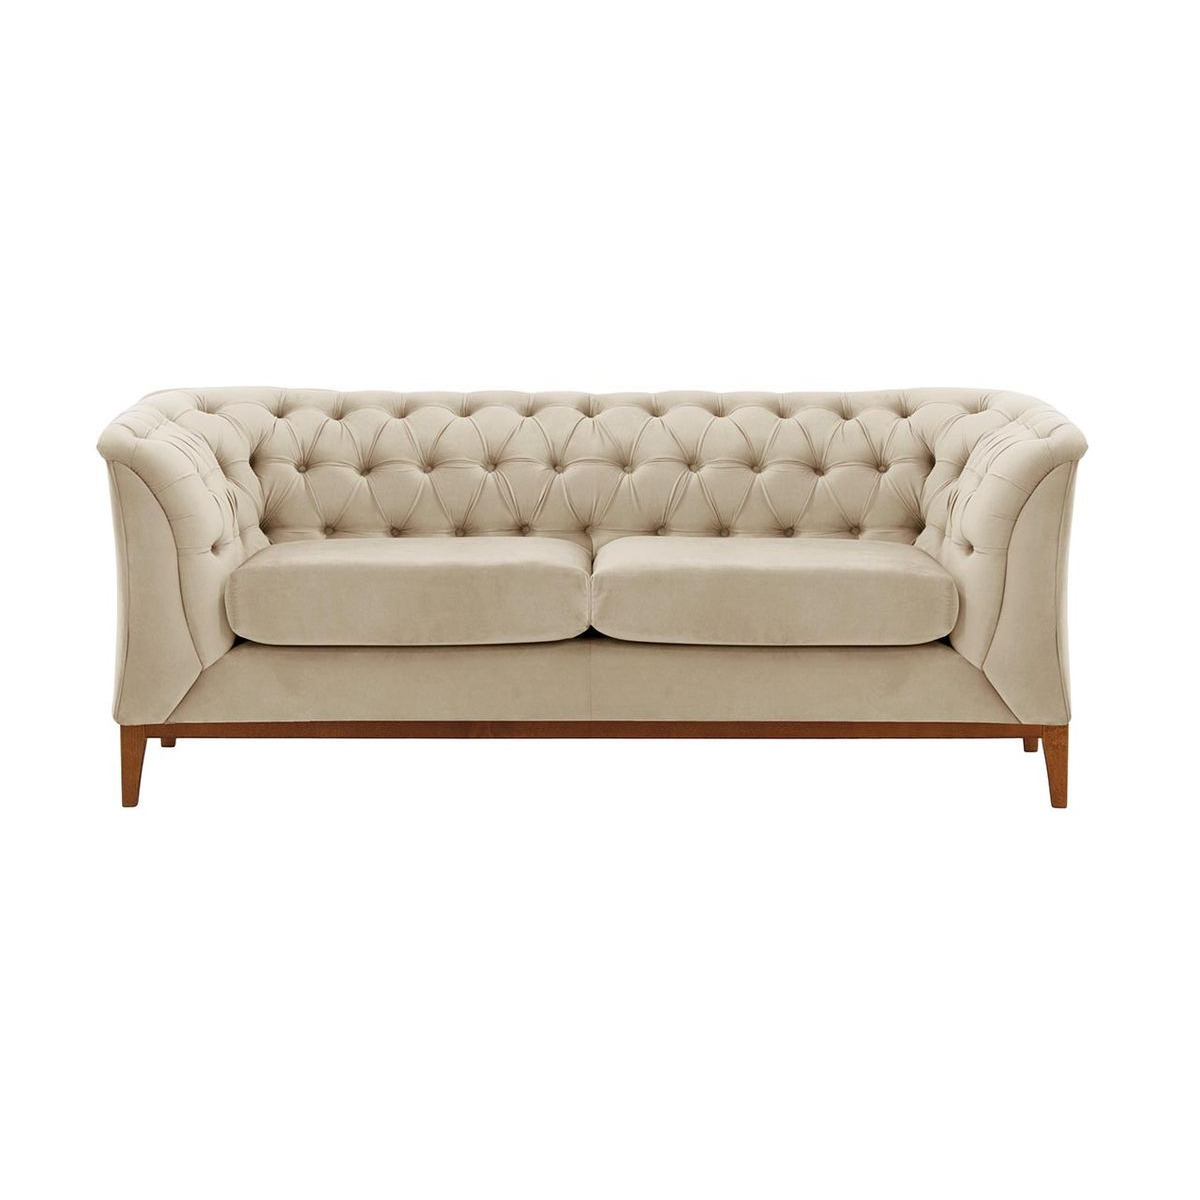 Chesterfield Modern 2 Seater Sofa Wood, light beige, Leg colour: aveo - image 1